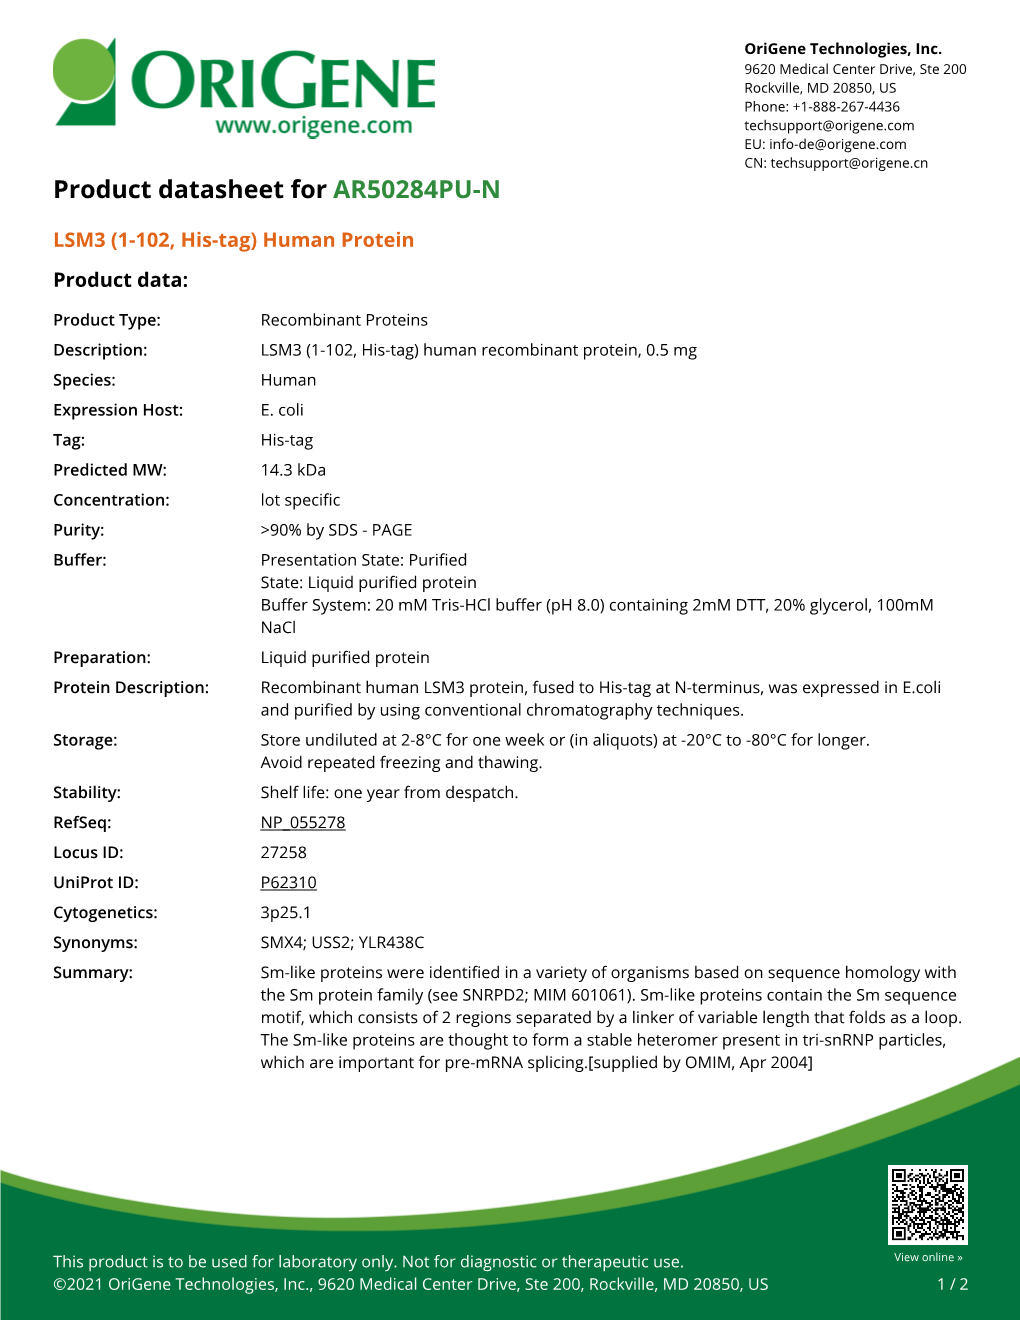 LSM3 (1-102, His-Tag) Human Protein – AR50284PU-N | Origene